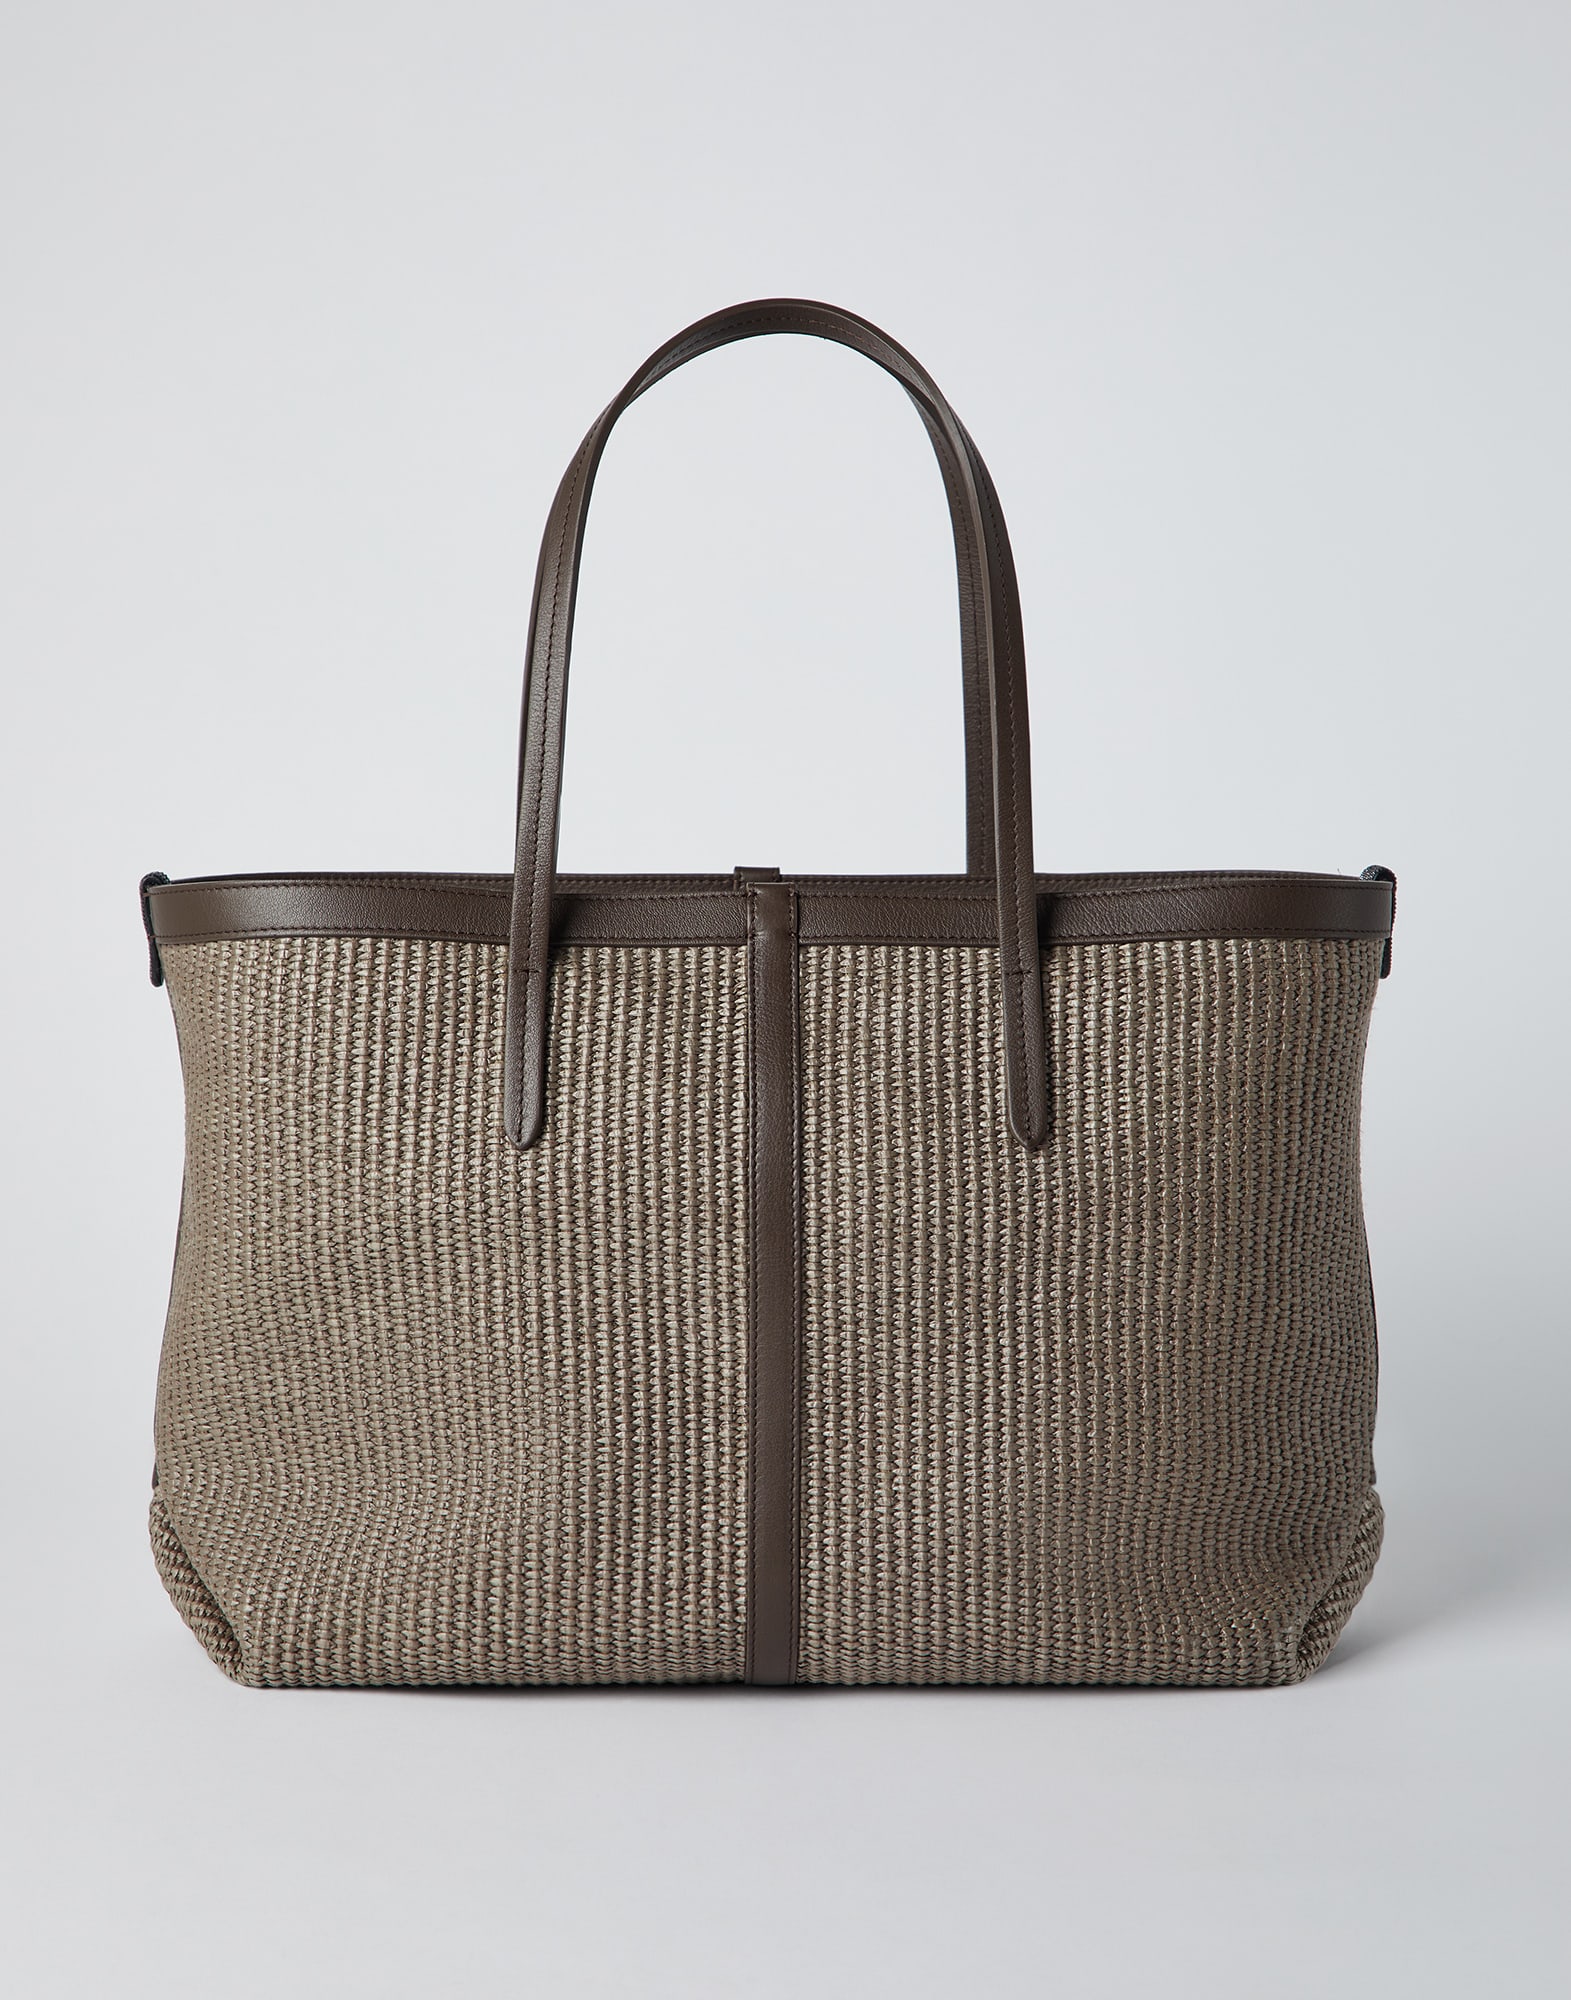 ZARA New Collection Bags, Classy & Stylish Women Bag, Raffia Basket Bag, Shoulder Bag